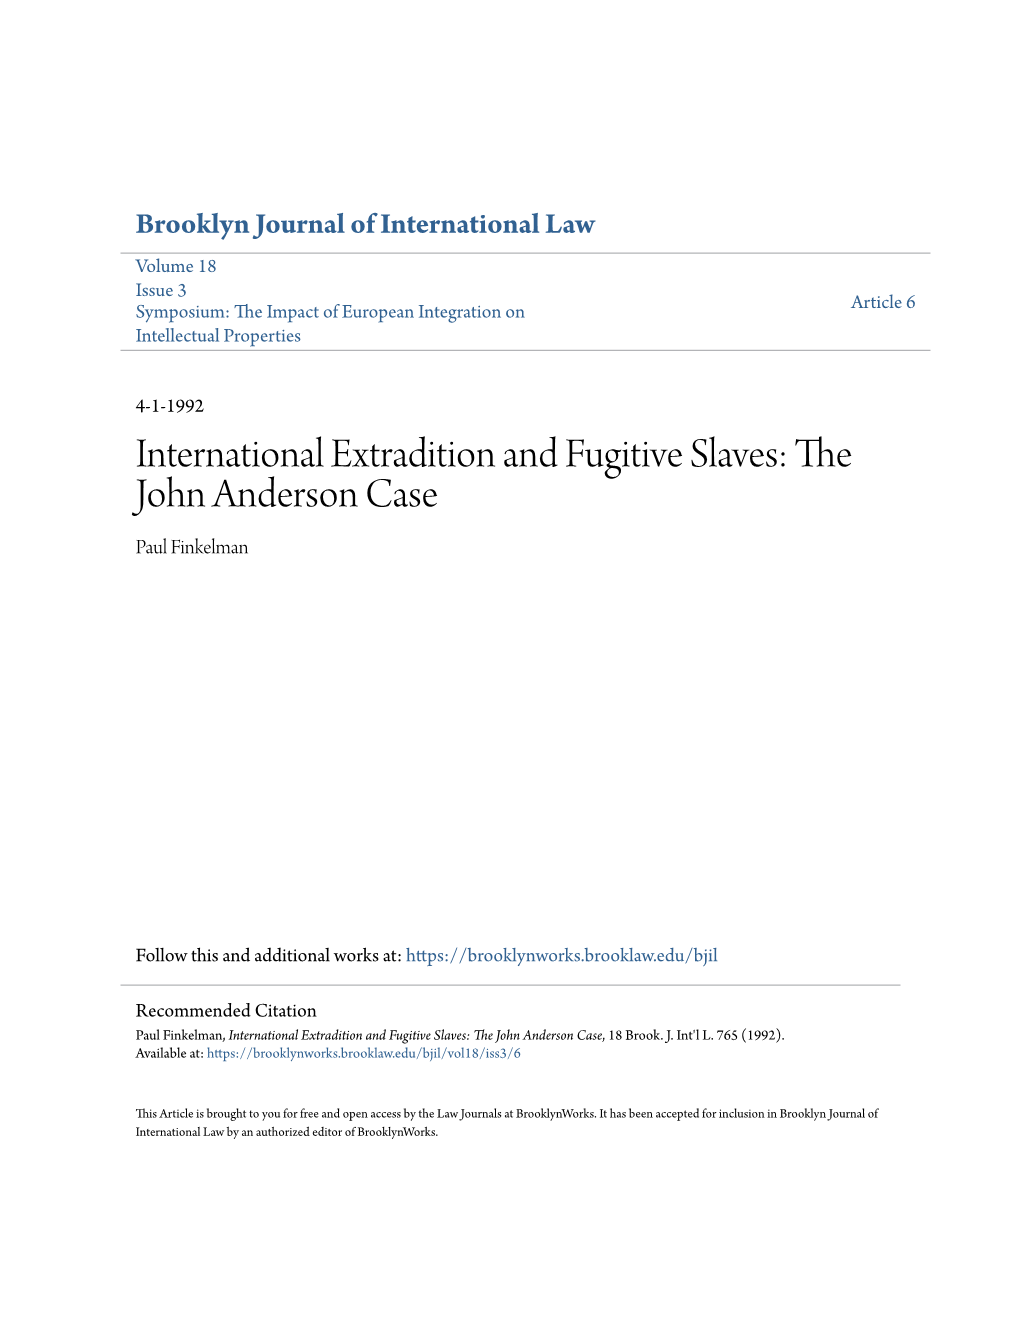 International Extradition and Fugitive Slaves: the John Anderson Case Paul Finkelman